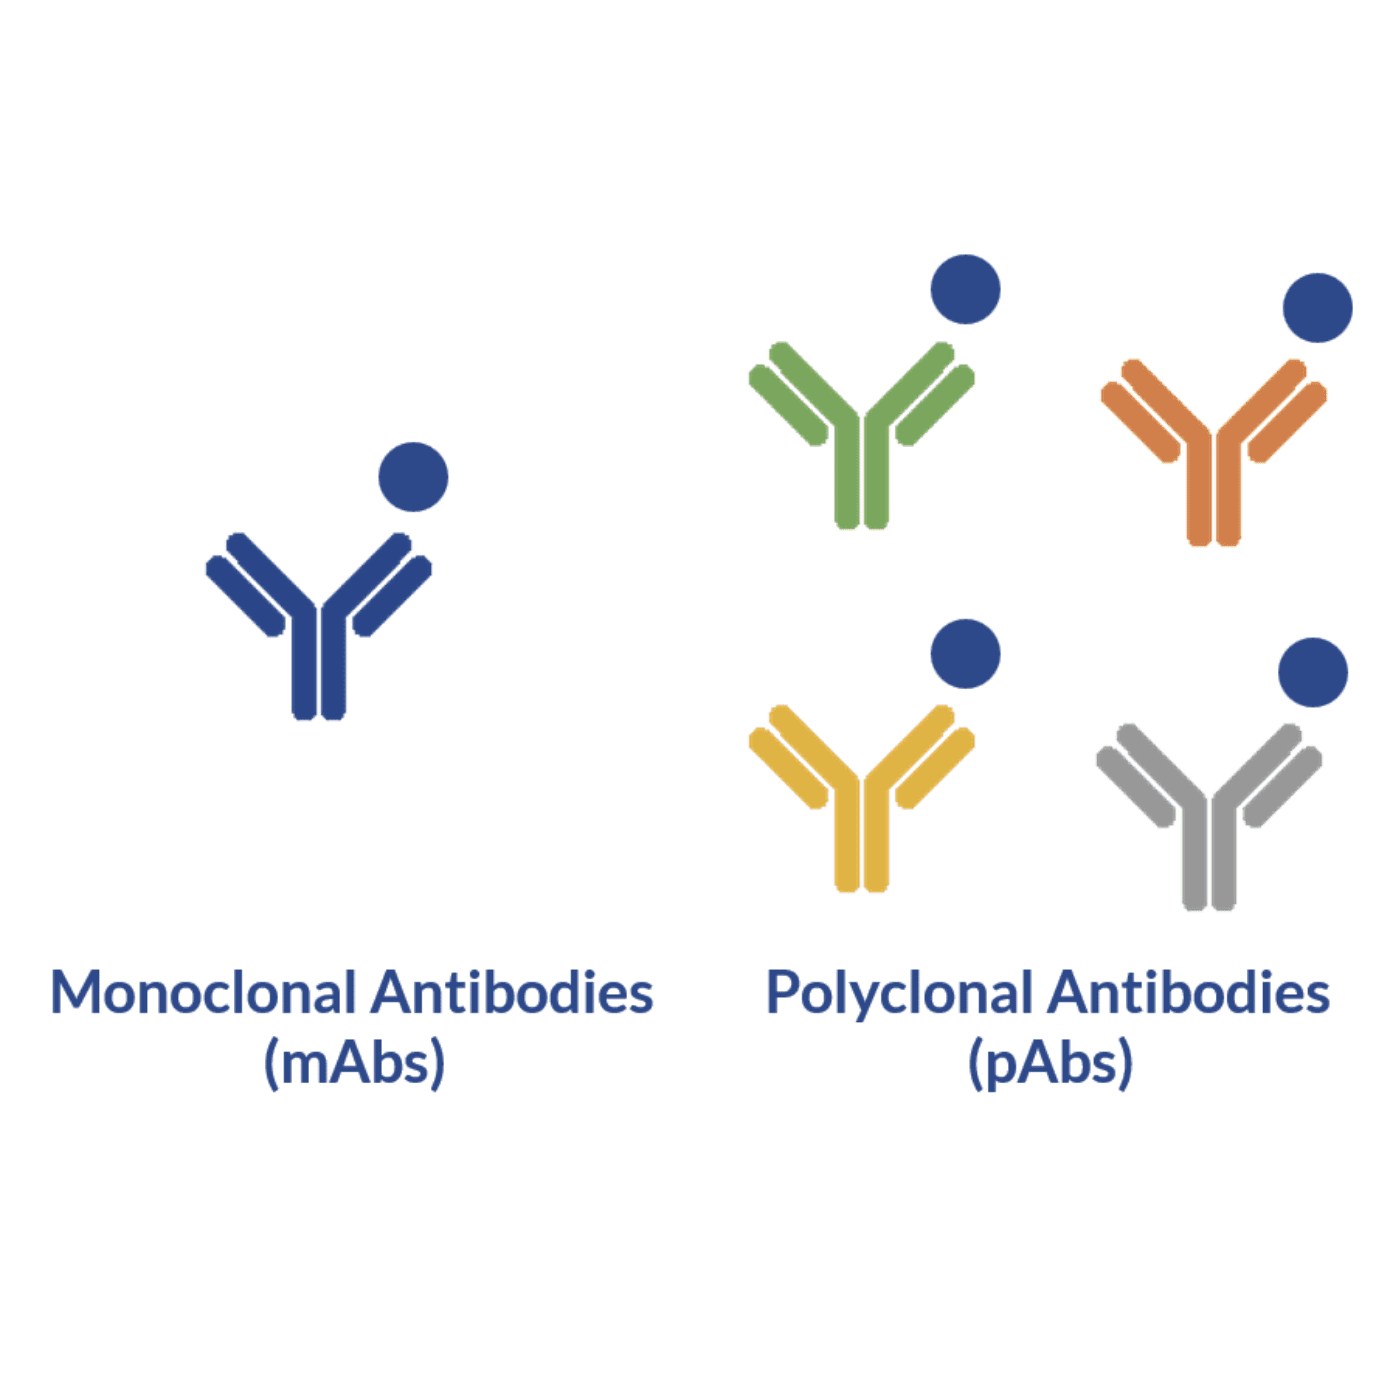 Monoclonal and polyclonal antibodies